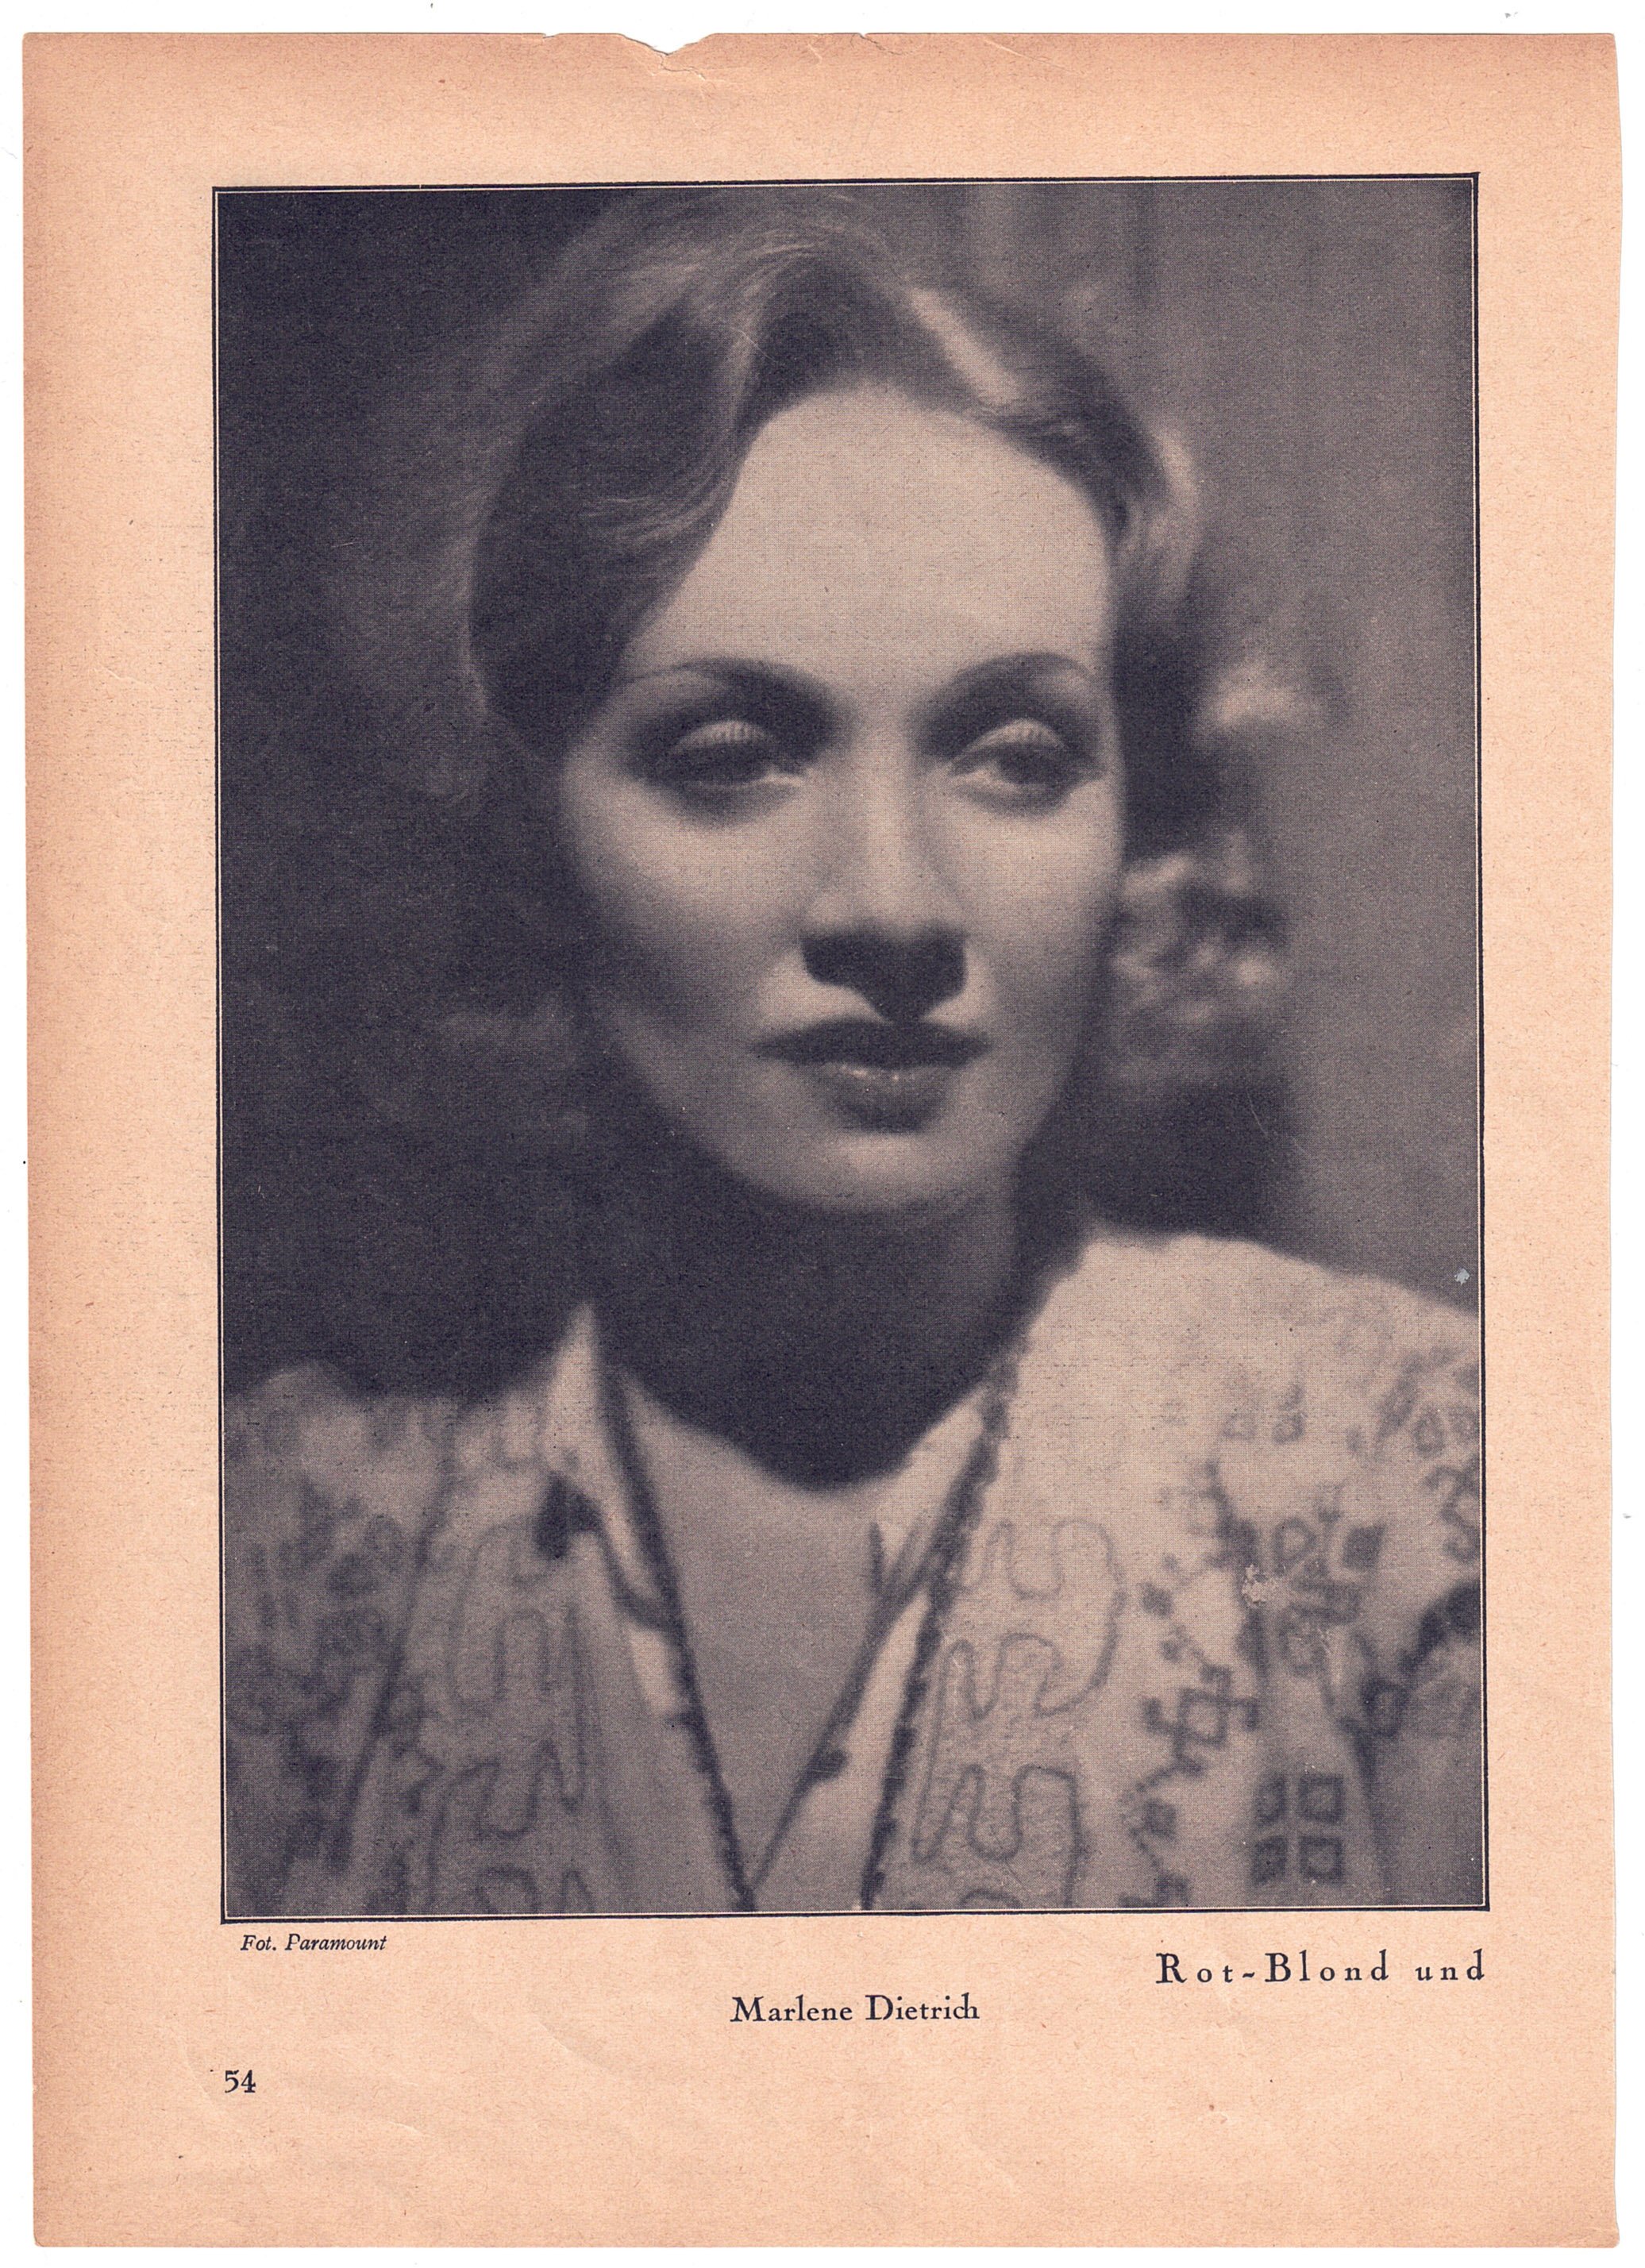 Marlene Dietrich (Kurt Tucholsky Literaturmuseum CC BY-NC-SA)